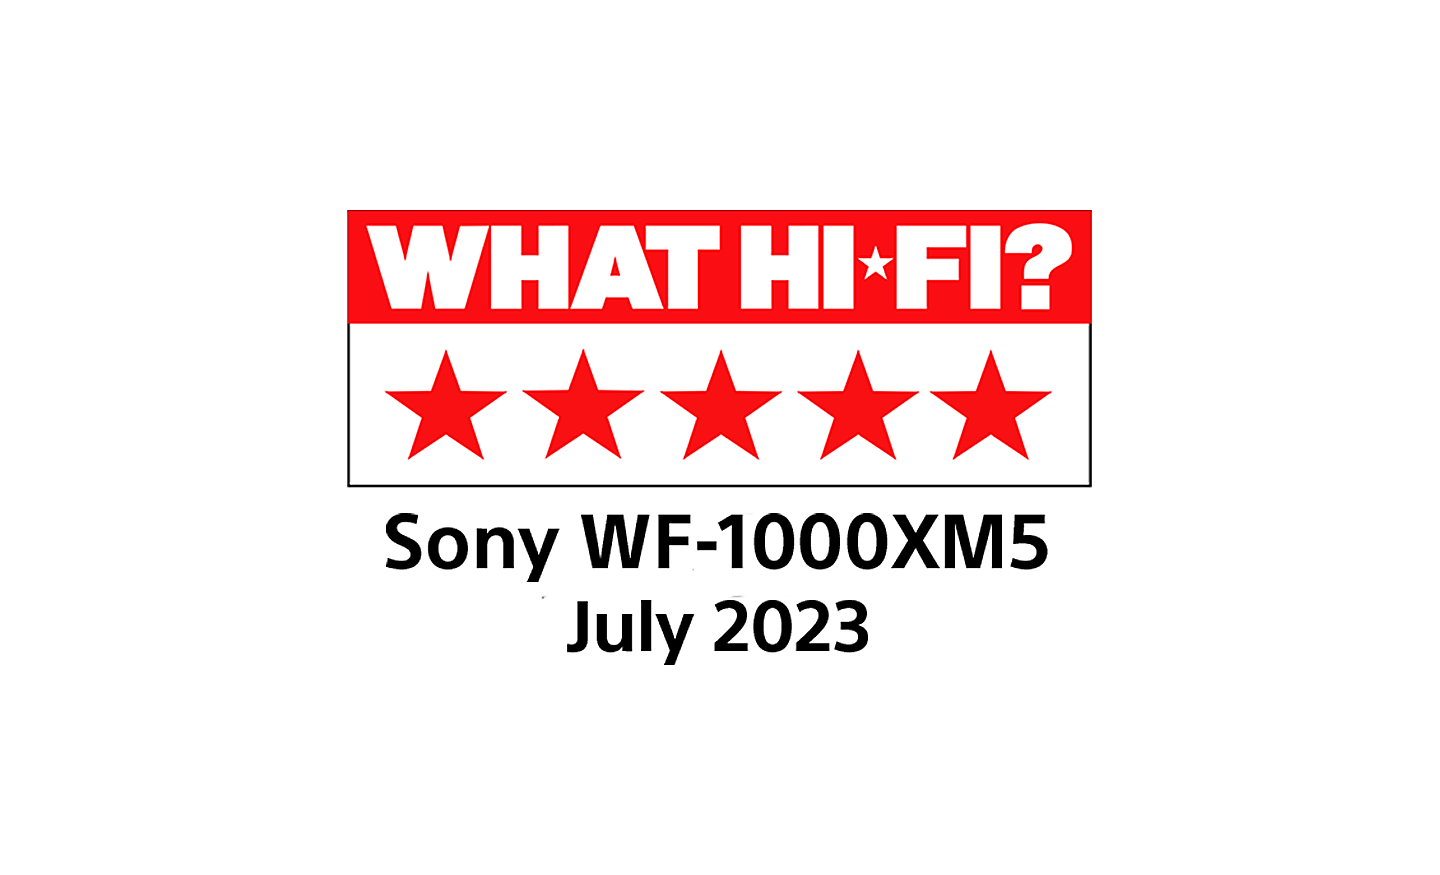 WF-1000XM5 What HI-FI Award Module